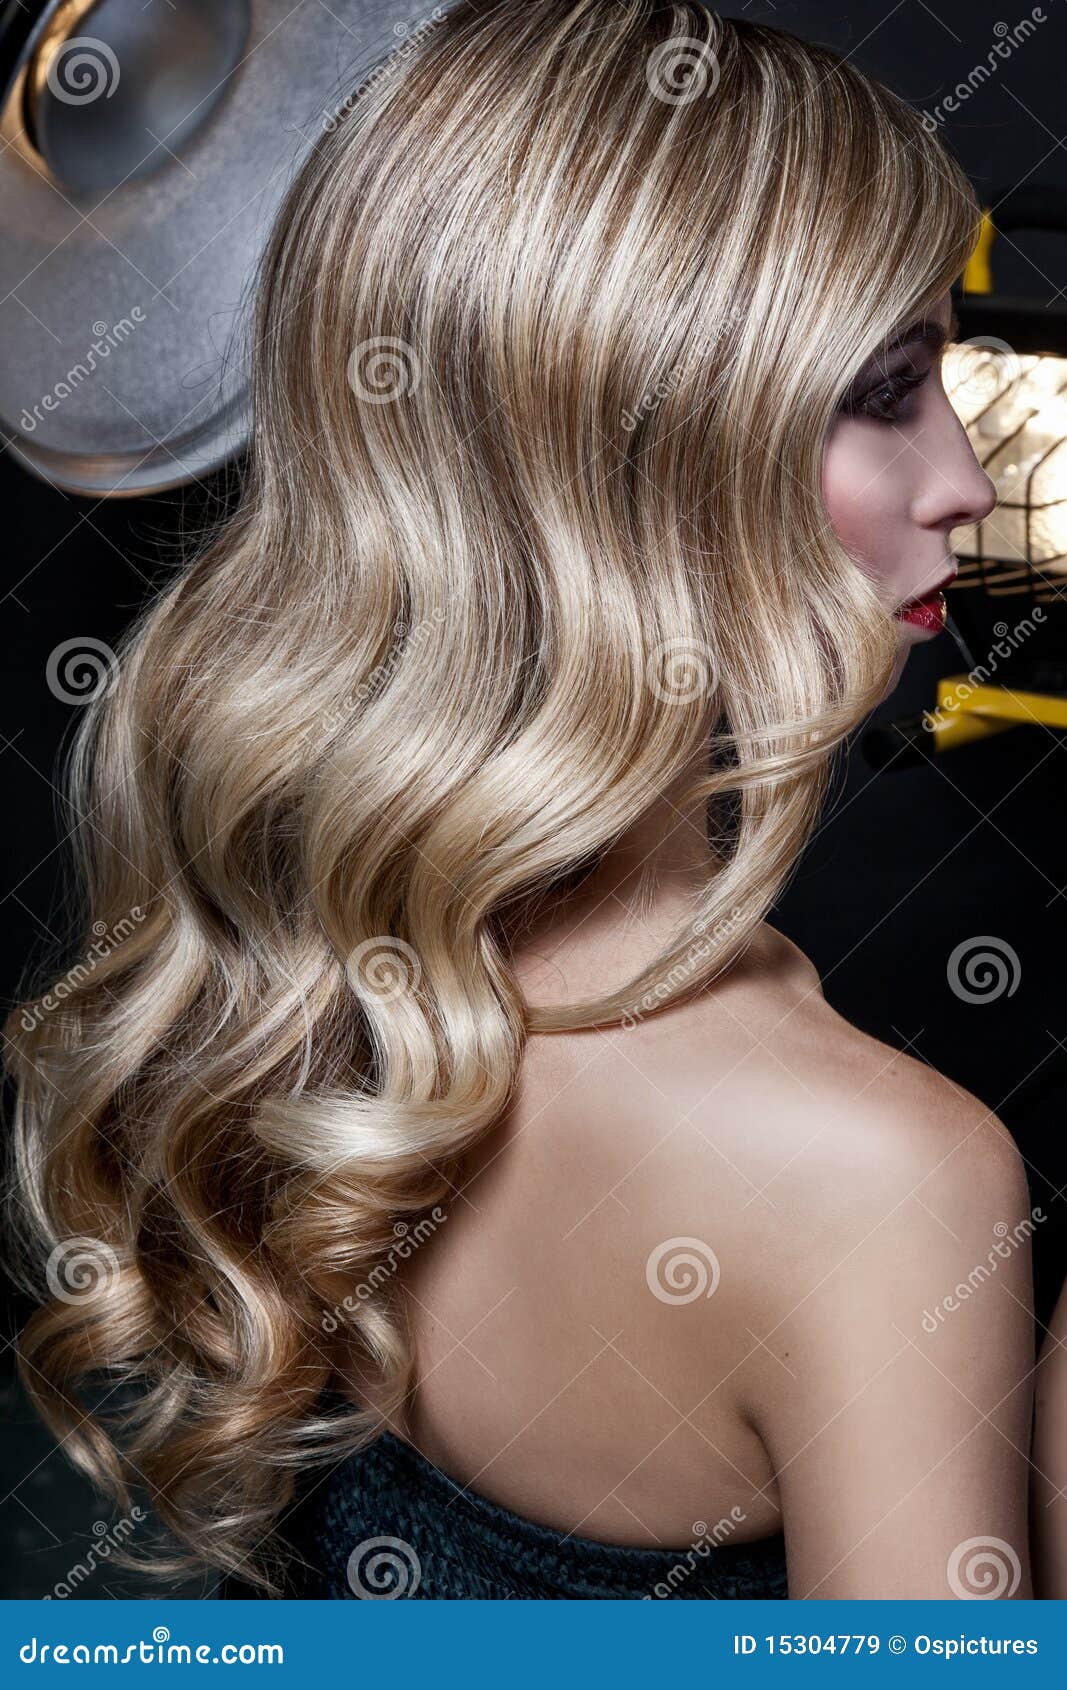 luscious blond curls